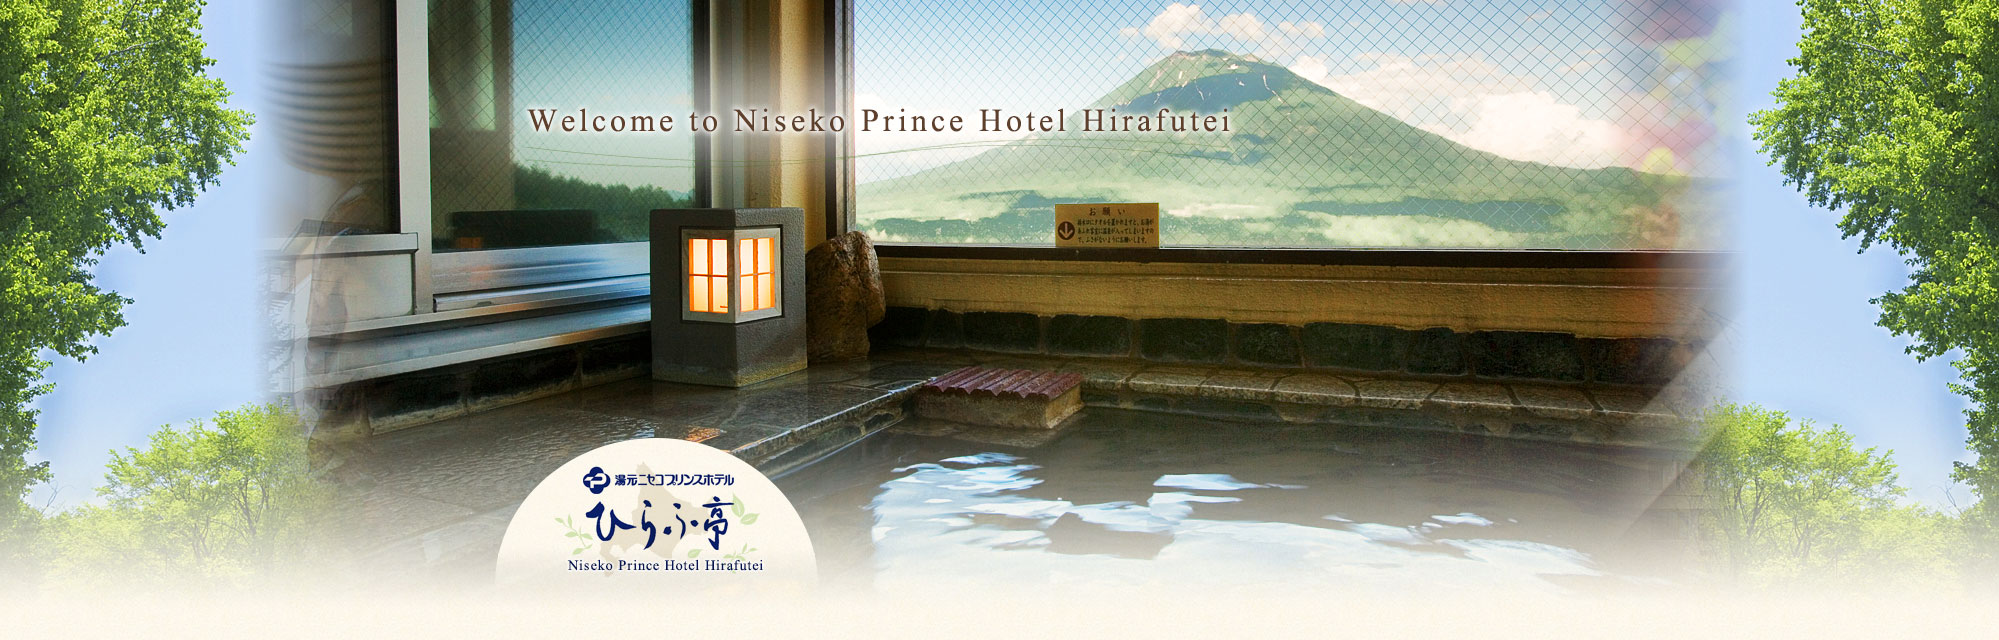 Welcome to Niseko Prince Hotel Hirafutei